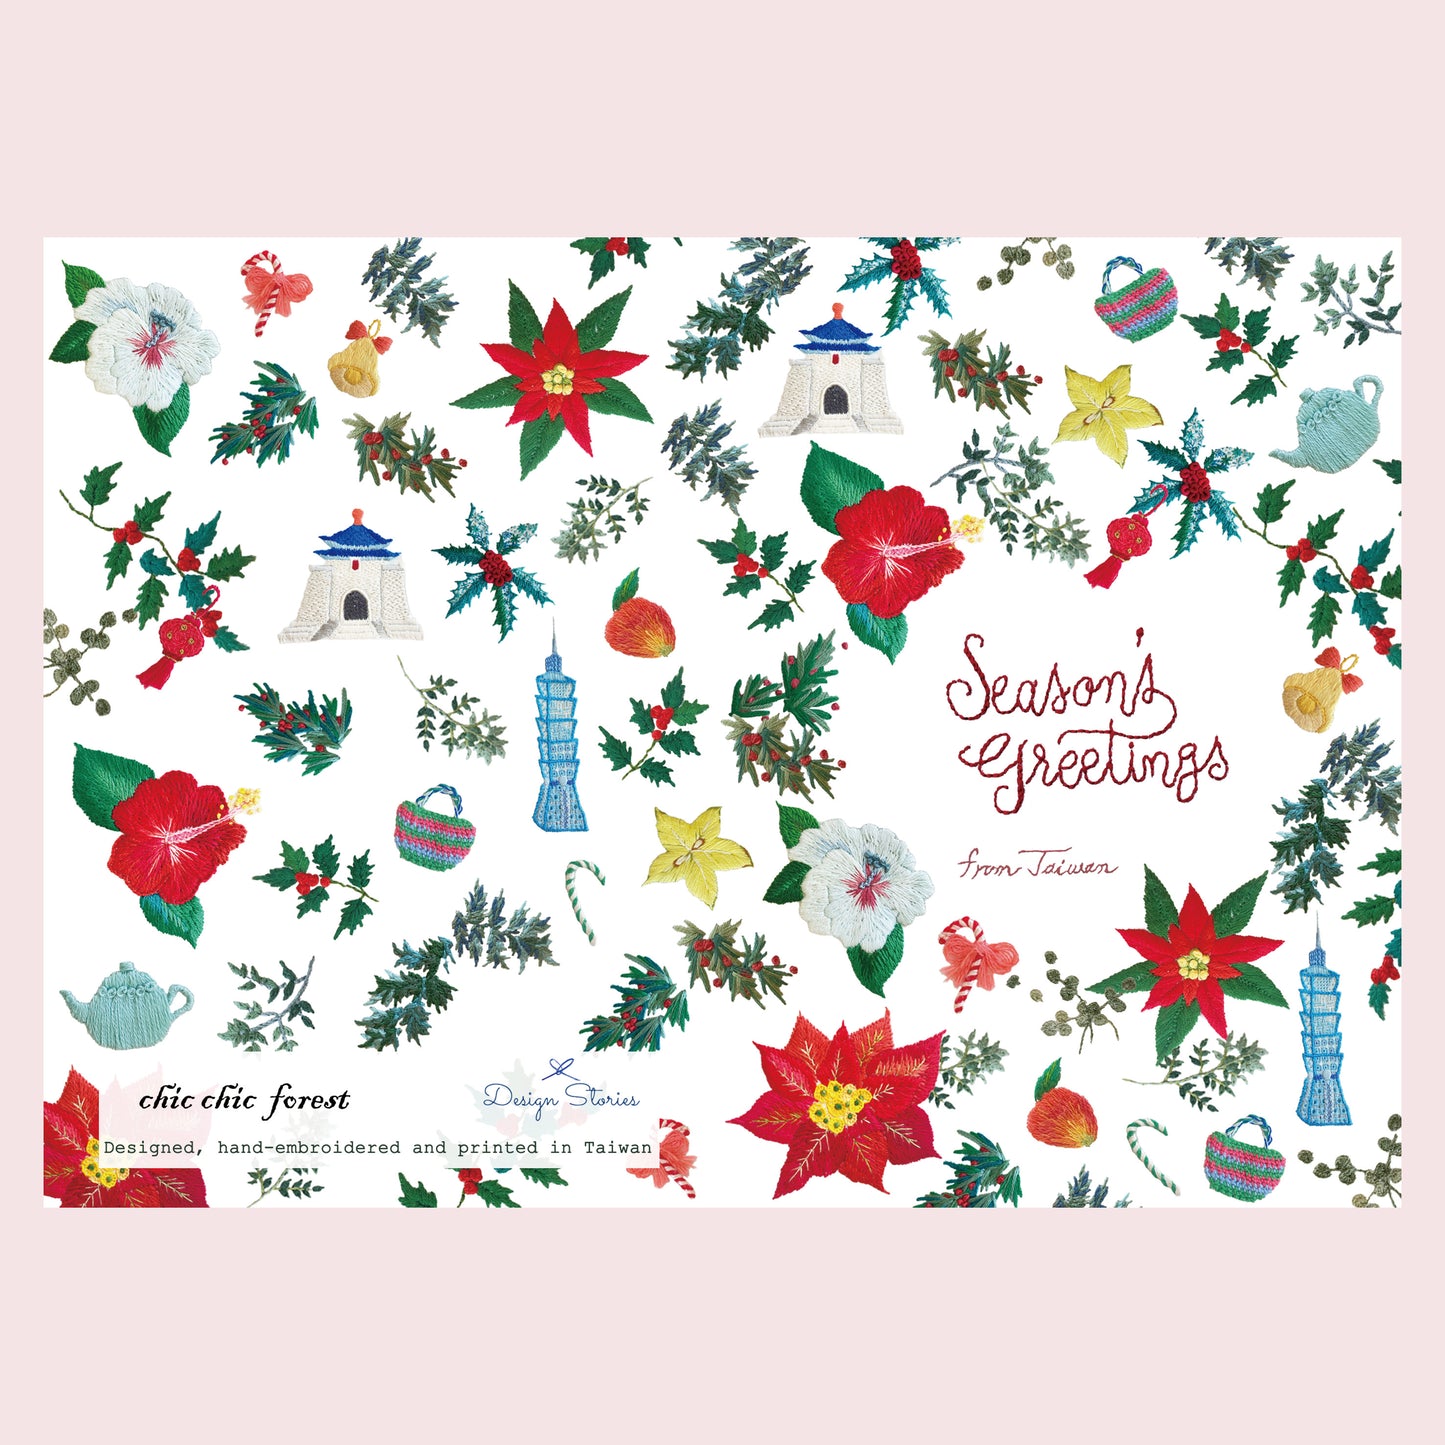 New⭐️ 手刺繍デザインの台湾クリスマスカード